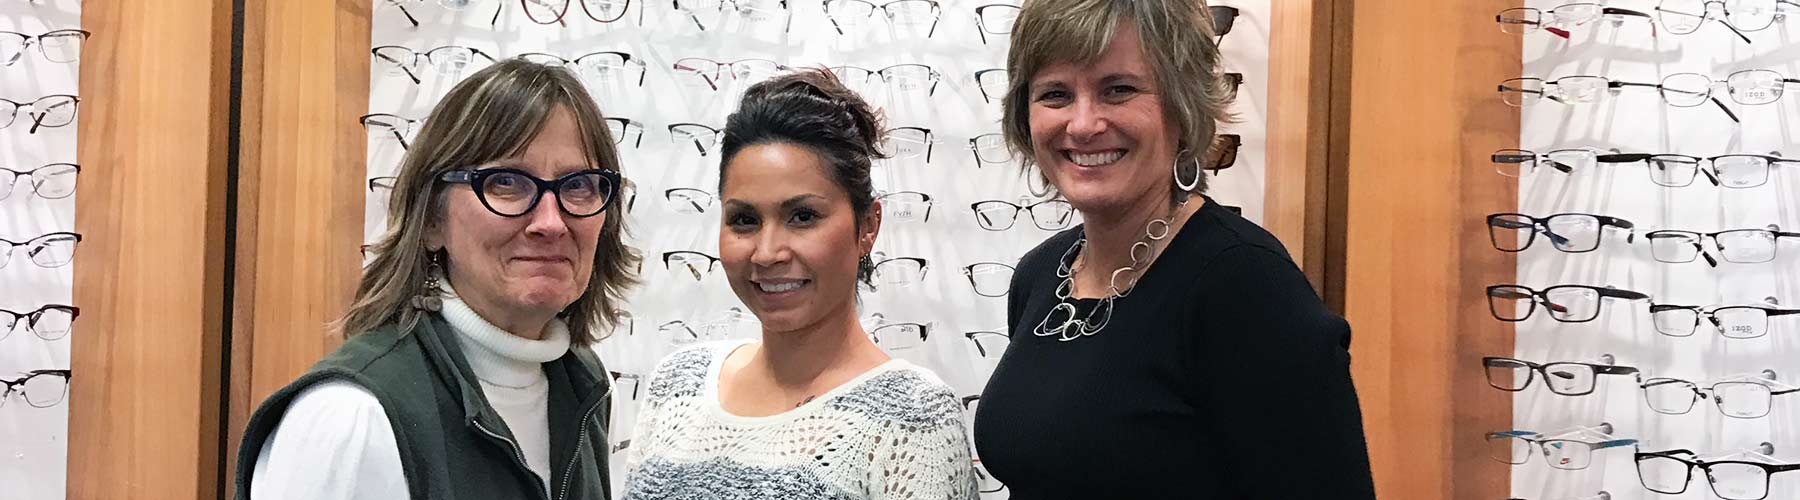 Eye Doctors in Grand Junction, CO | Fairmount Eye Care